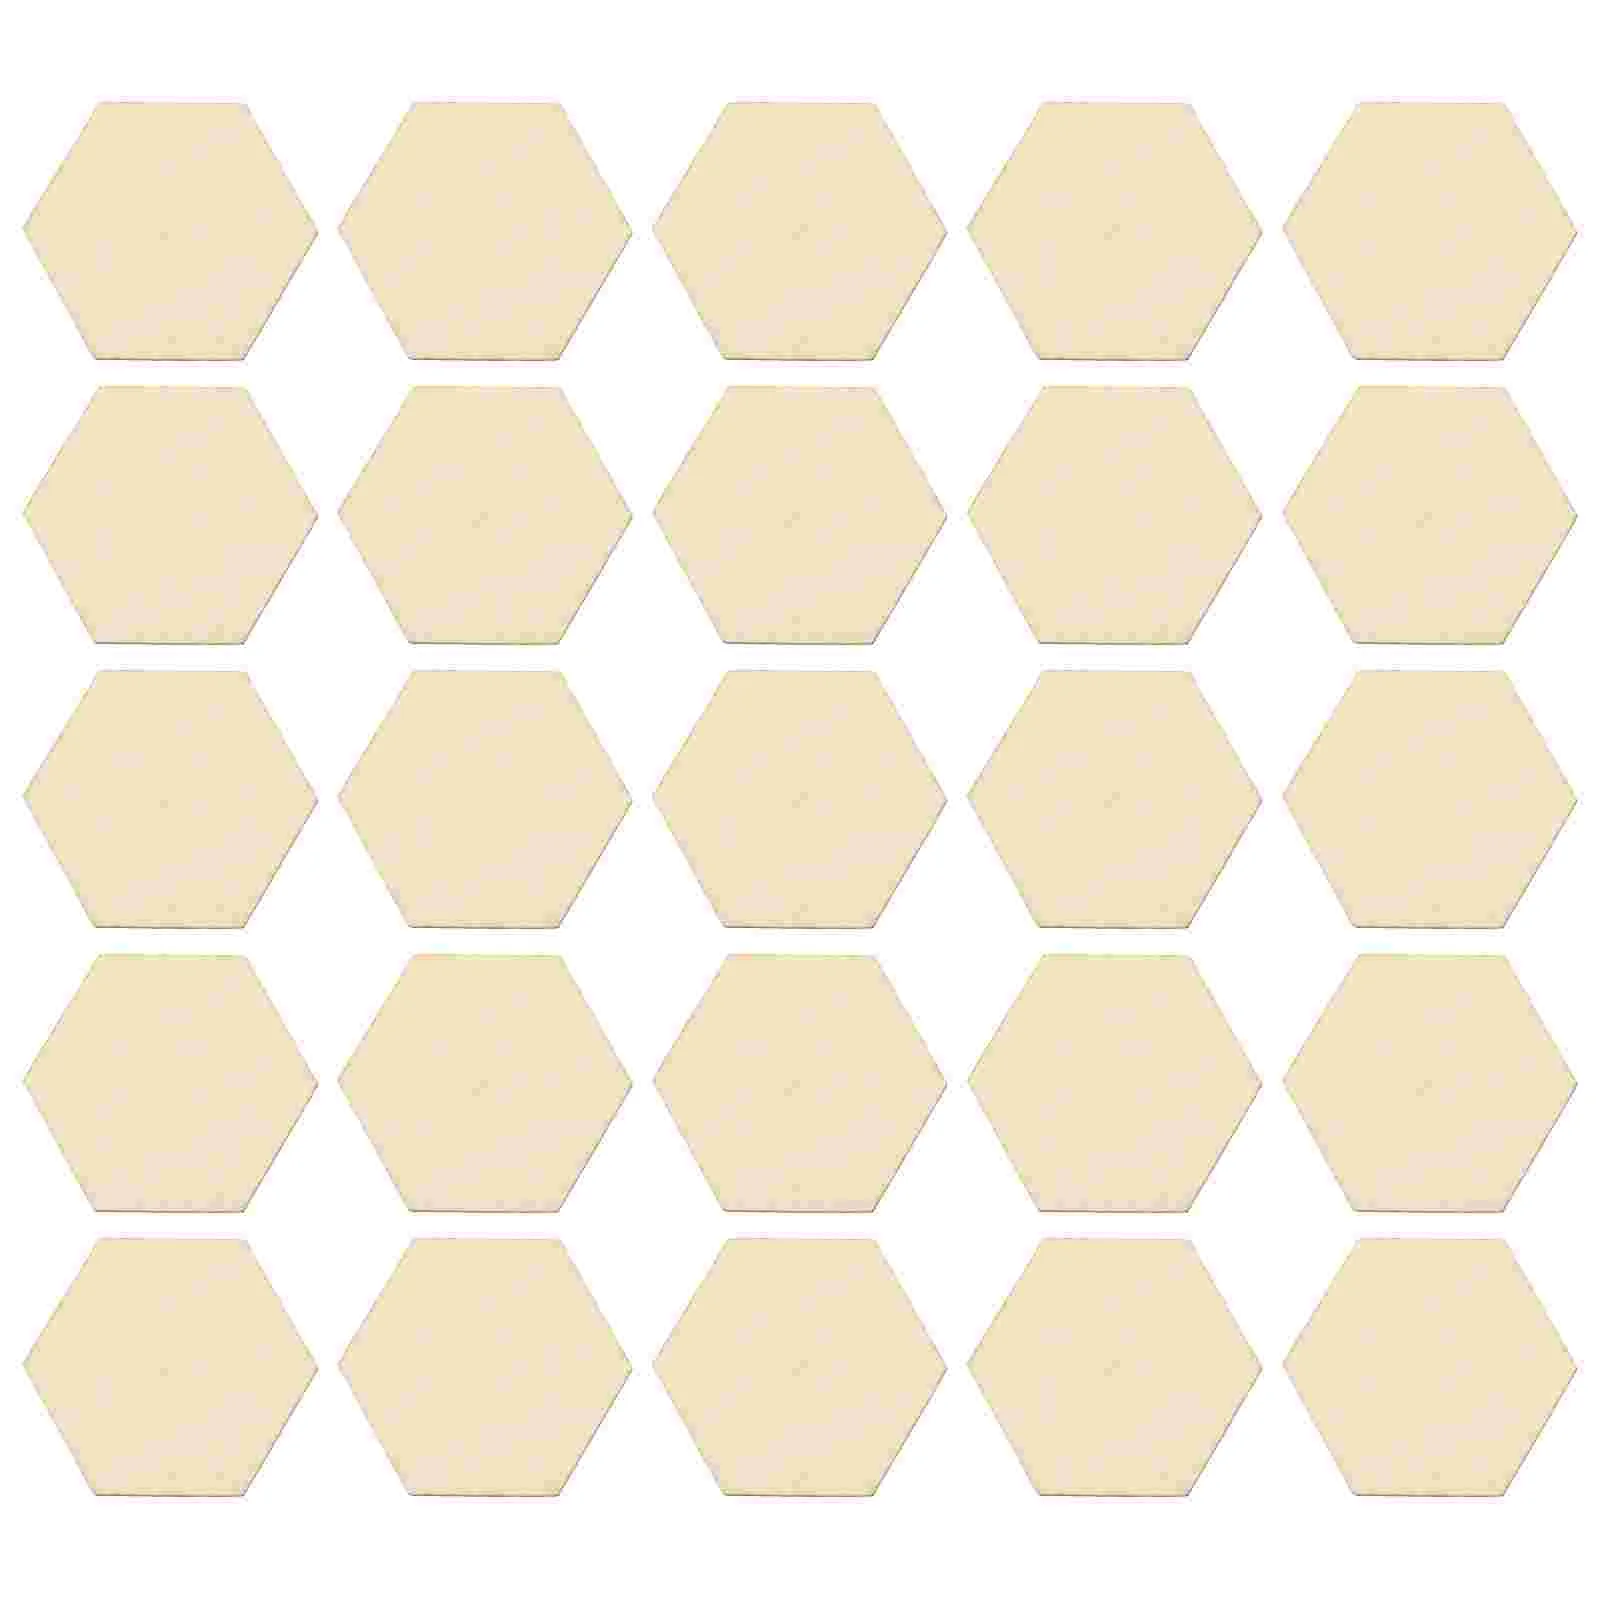 

Sewacc Wooden Pieces Hexagon Wood Shape Wood Geometric Cutout Unfinished Hexagon Shape Wooden Slices Blank Diy Arts